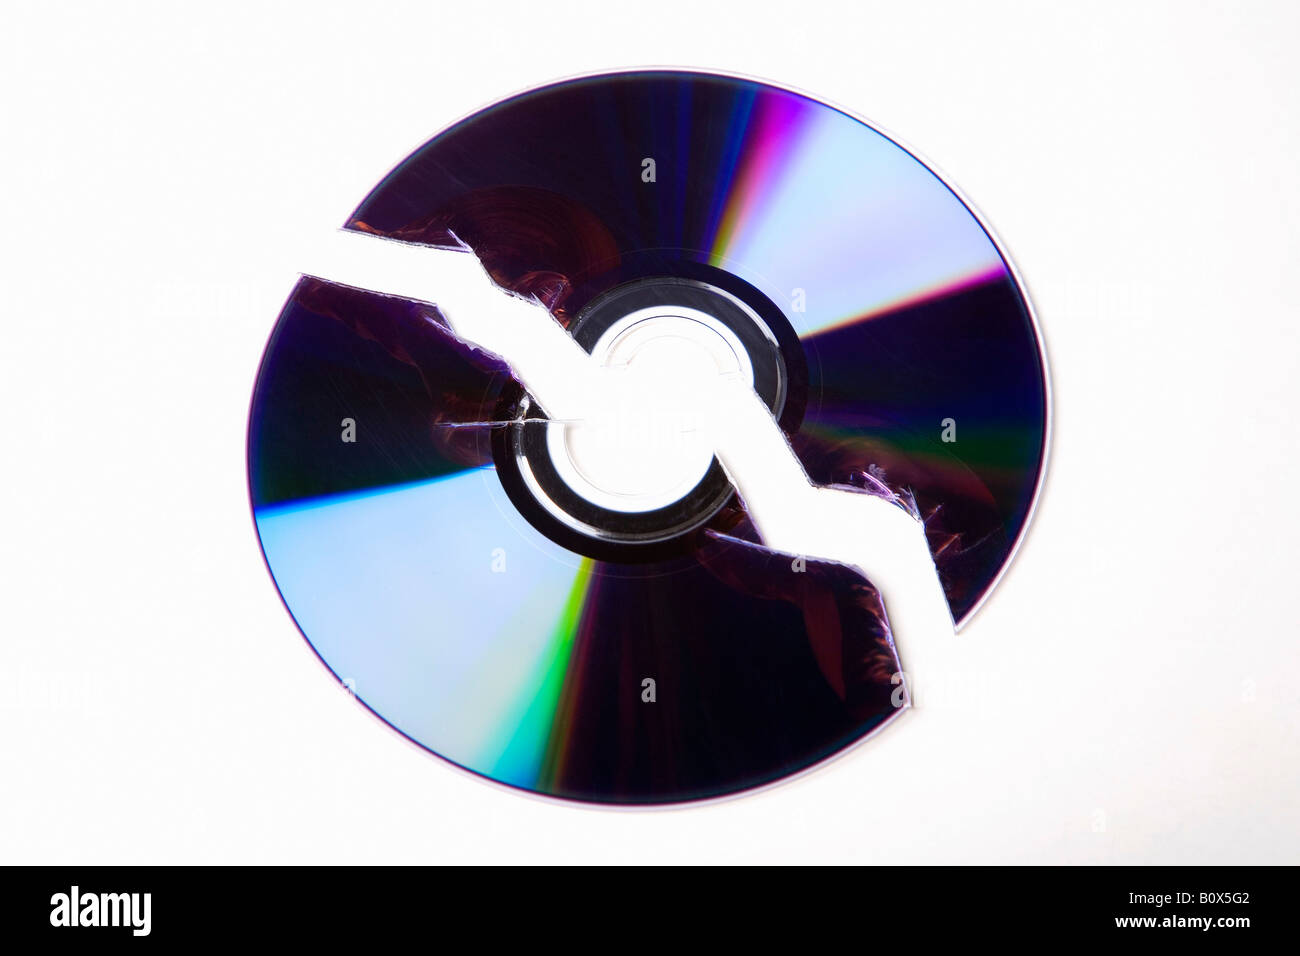 A compact disc broken in half Stock Photo